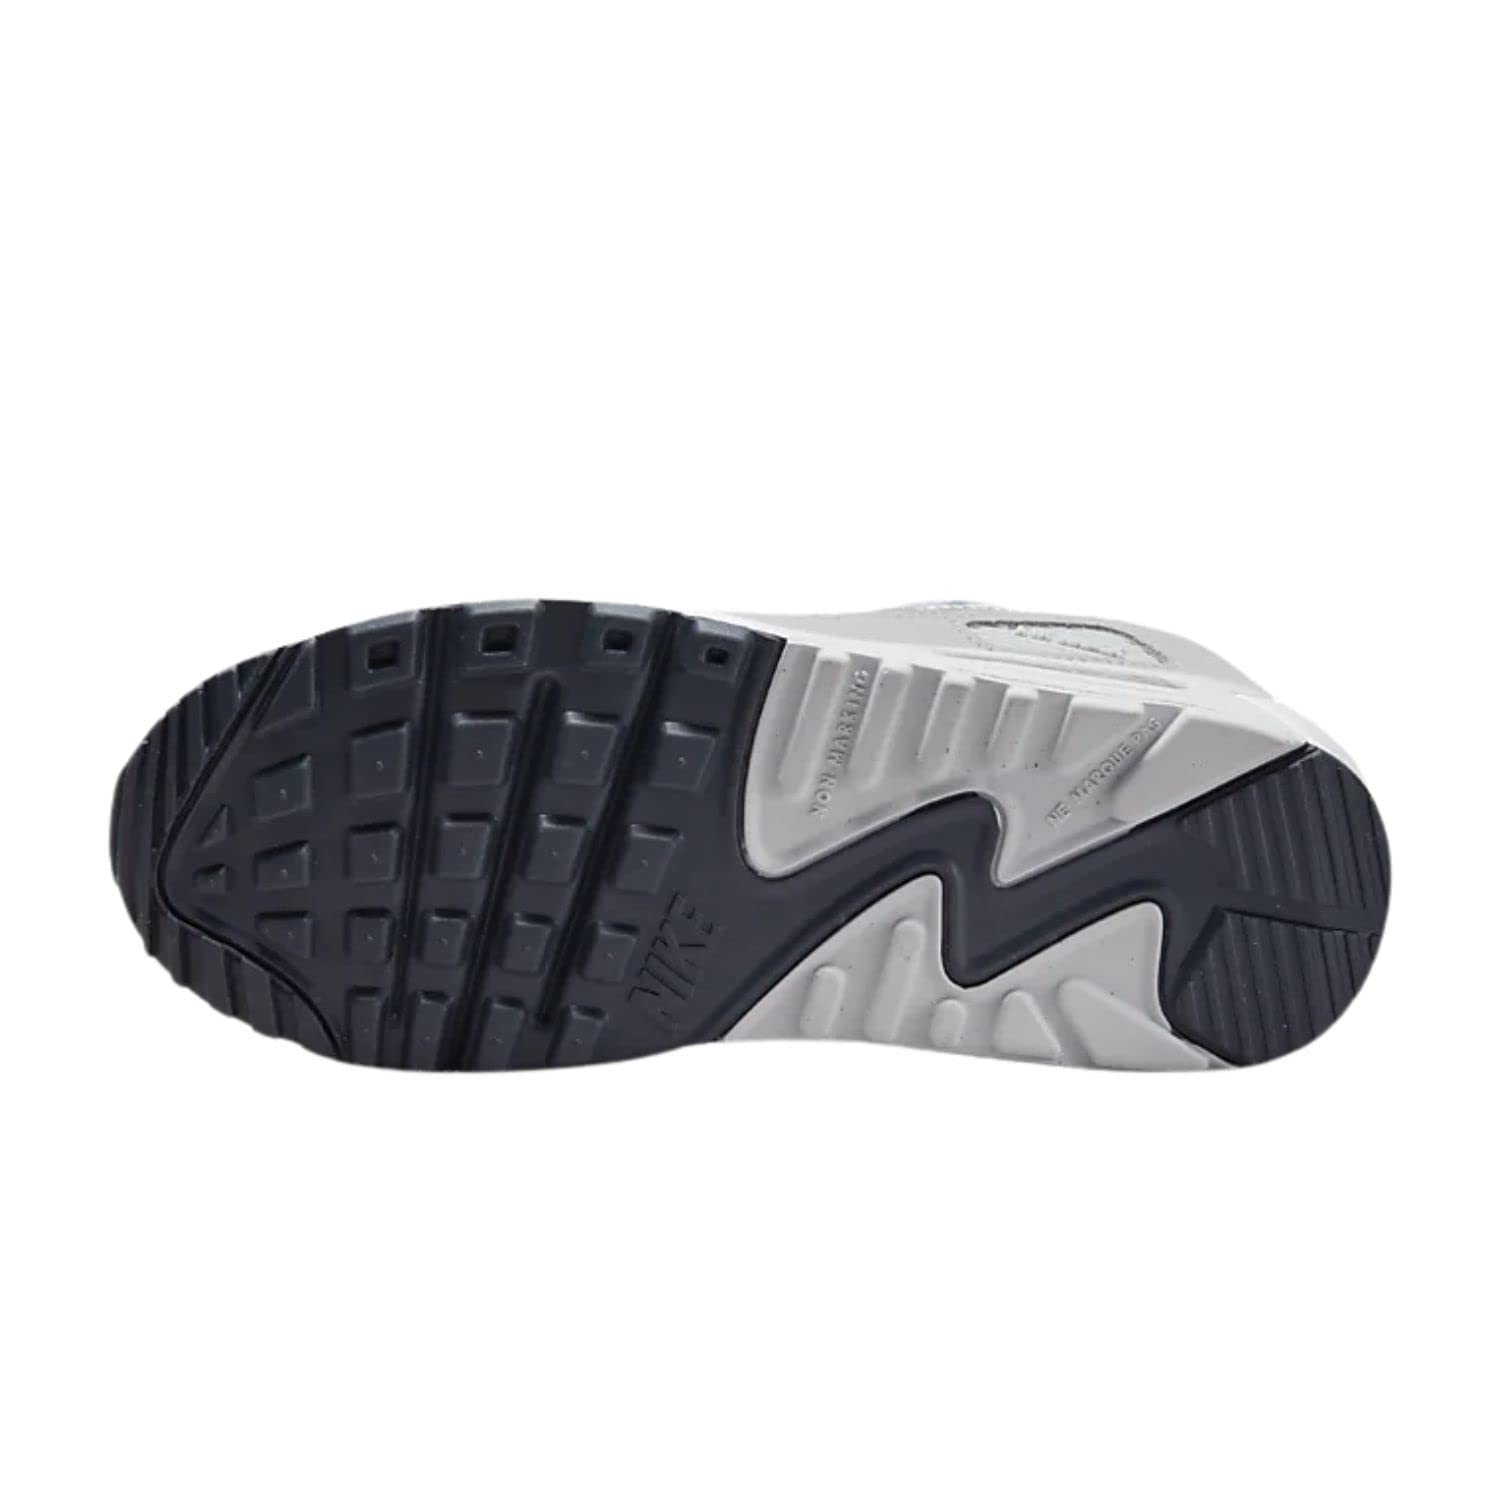 Nike Air Max 90 LTR Big Kids’ Shoes